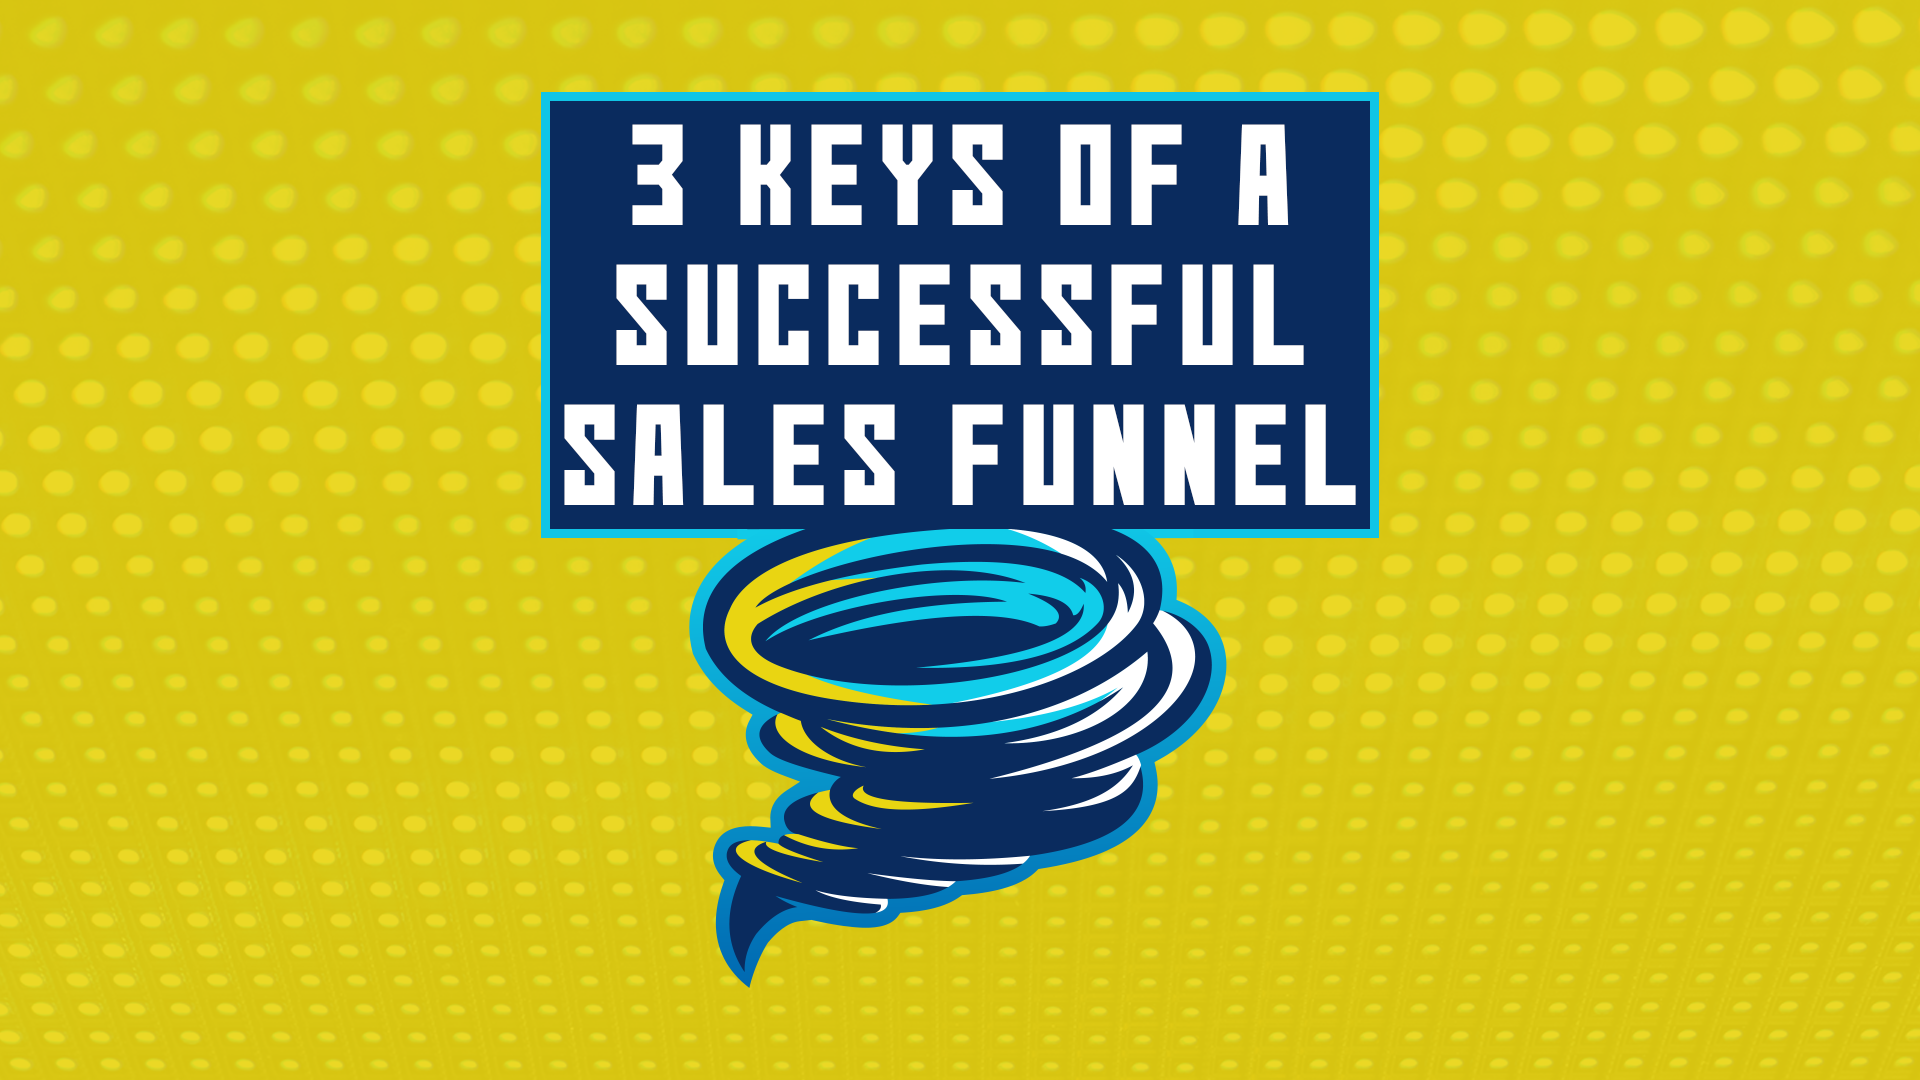 Free Video - 3 Keys Of A Successful Sales Funnel